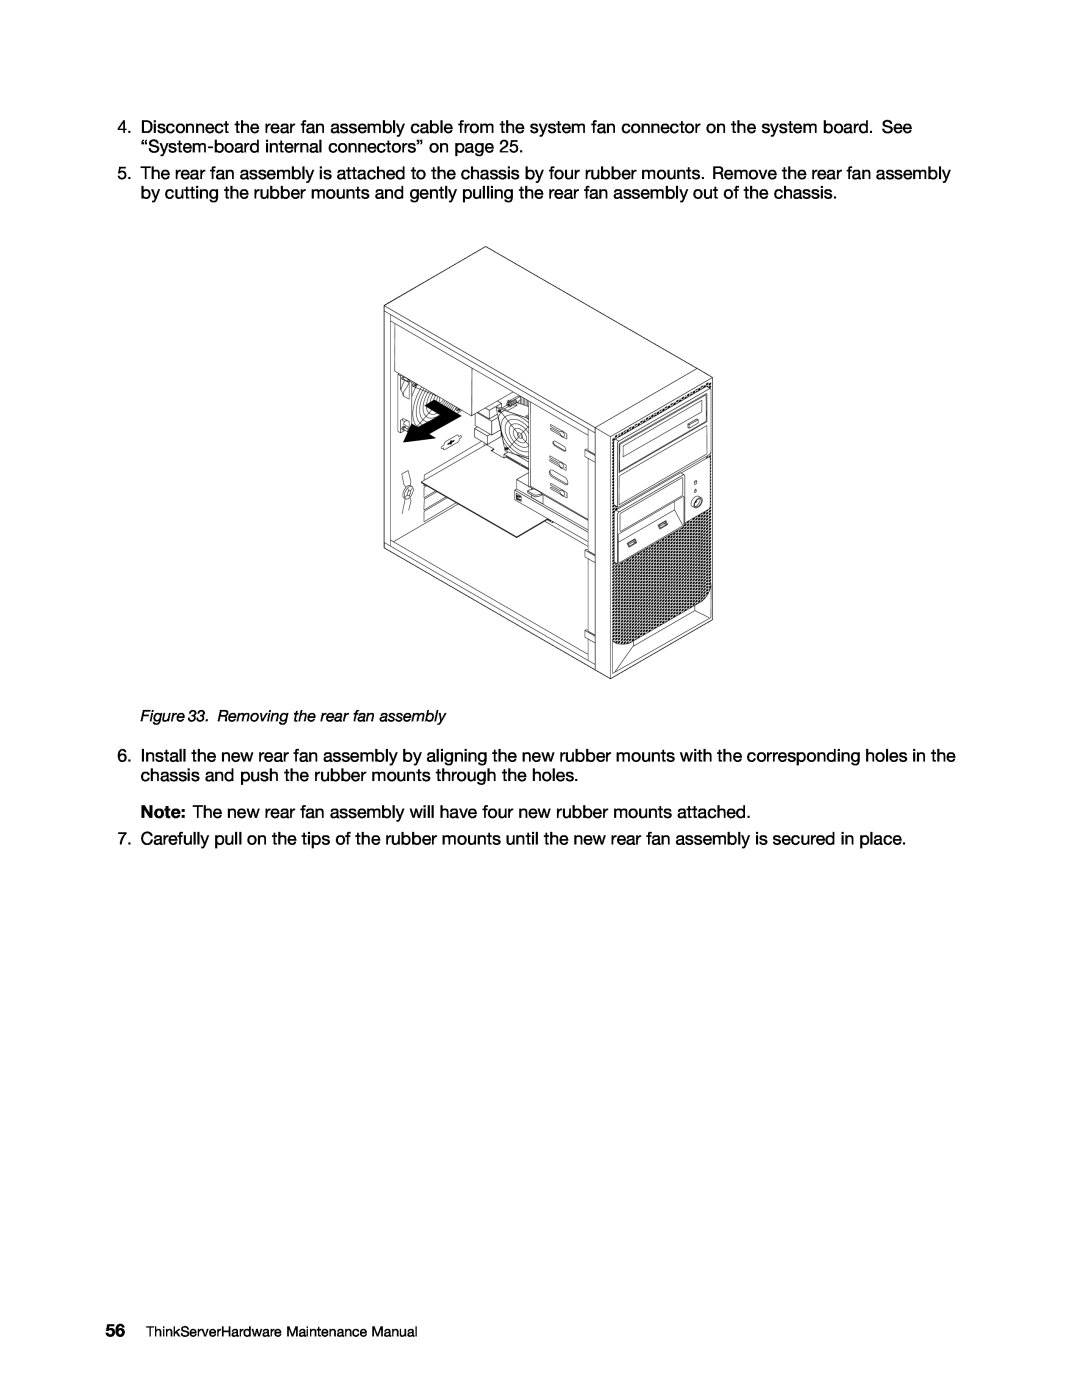 Lenovo 1008, 992, 981, 1010 manual Removing the rear fan assembly, ThinkServerHardware Maintenance Manual 